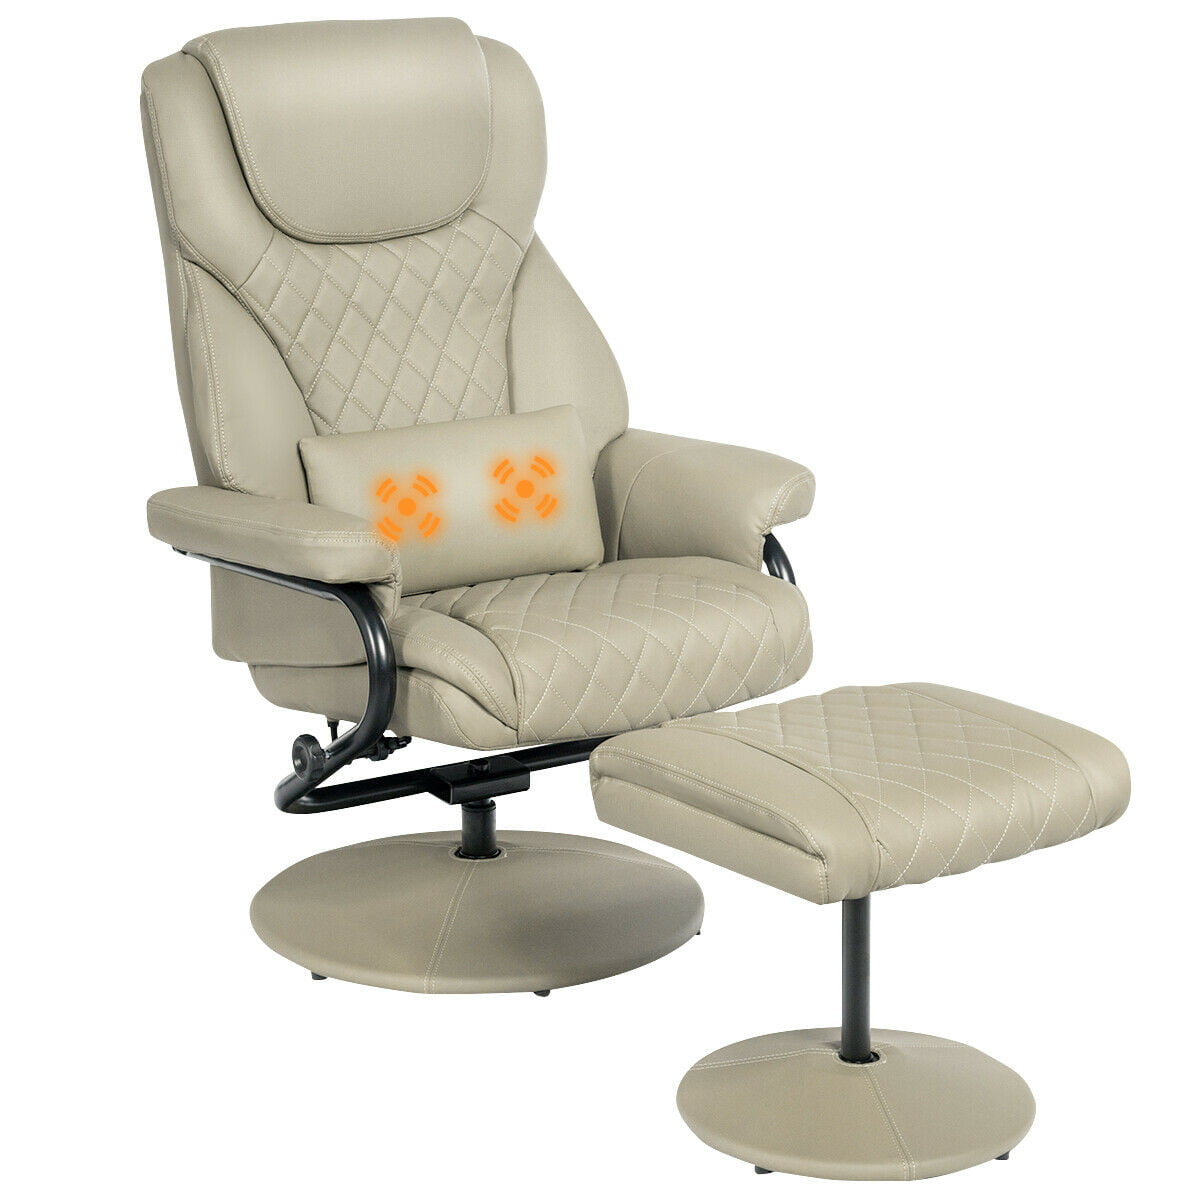 Gymax Massage Recliner Chair Leather Armchair Swivel w/Ottoman&Lumbar Support Beige Walmart